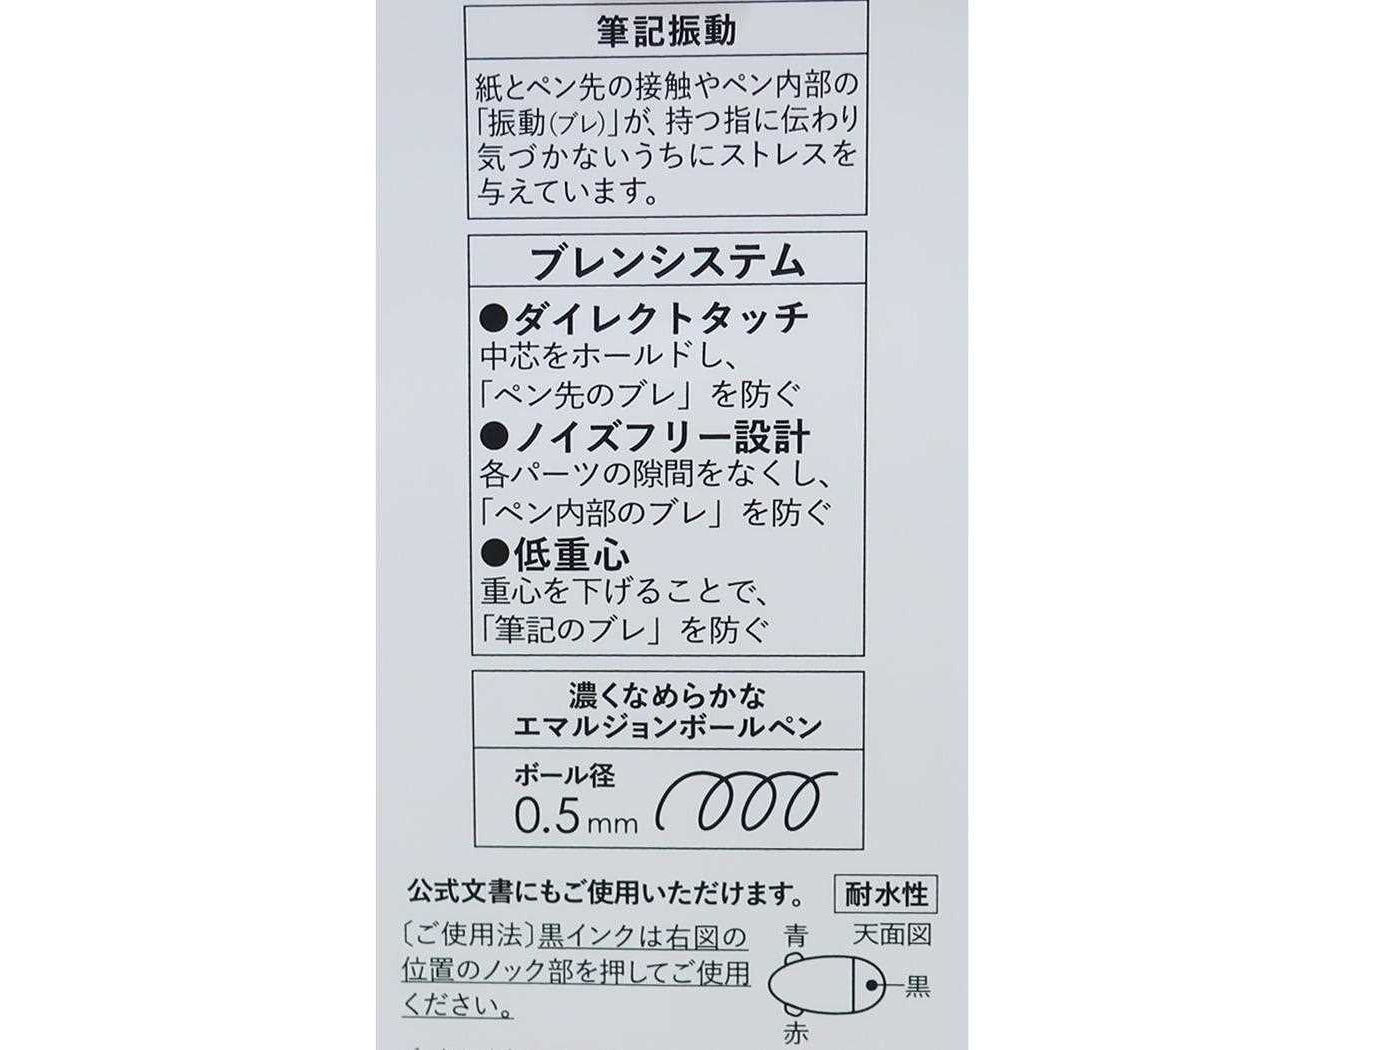 Zebra Sanrio bLen3c 3 Colour Ballpoint Multi Pen - Kuromi